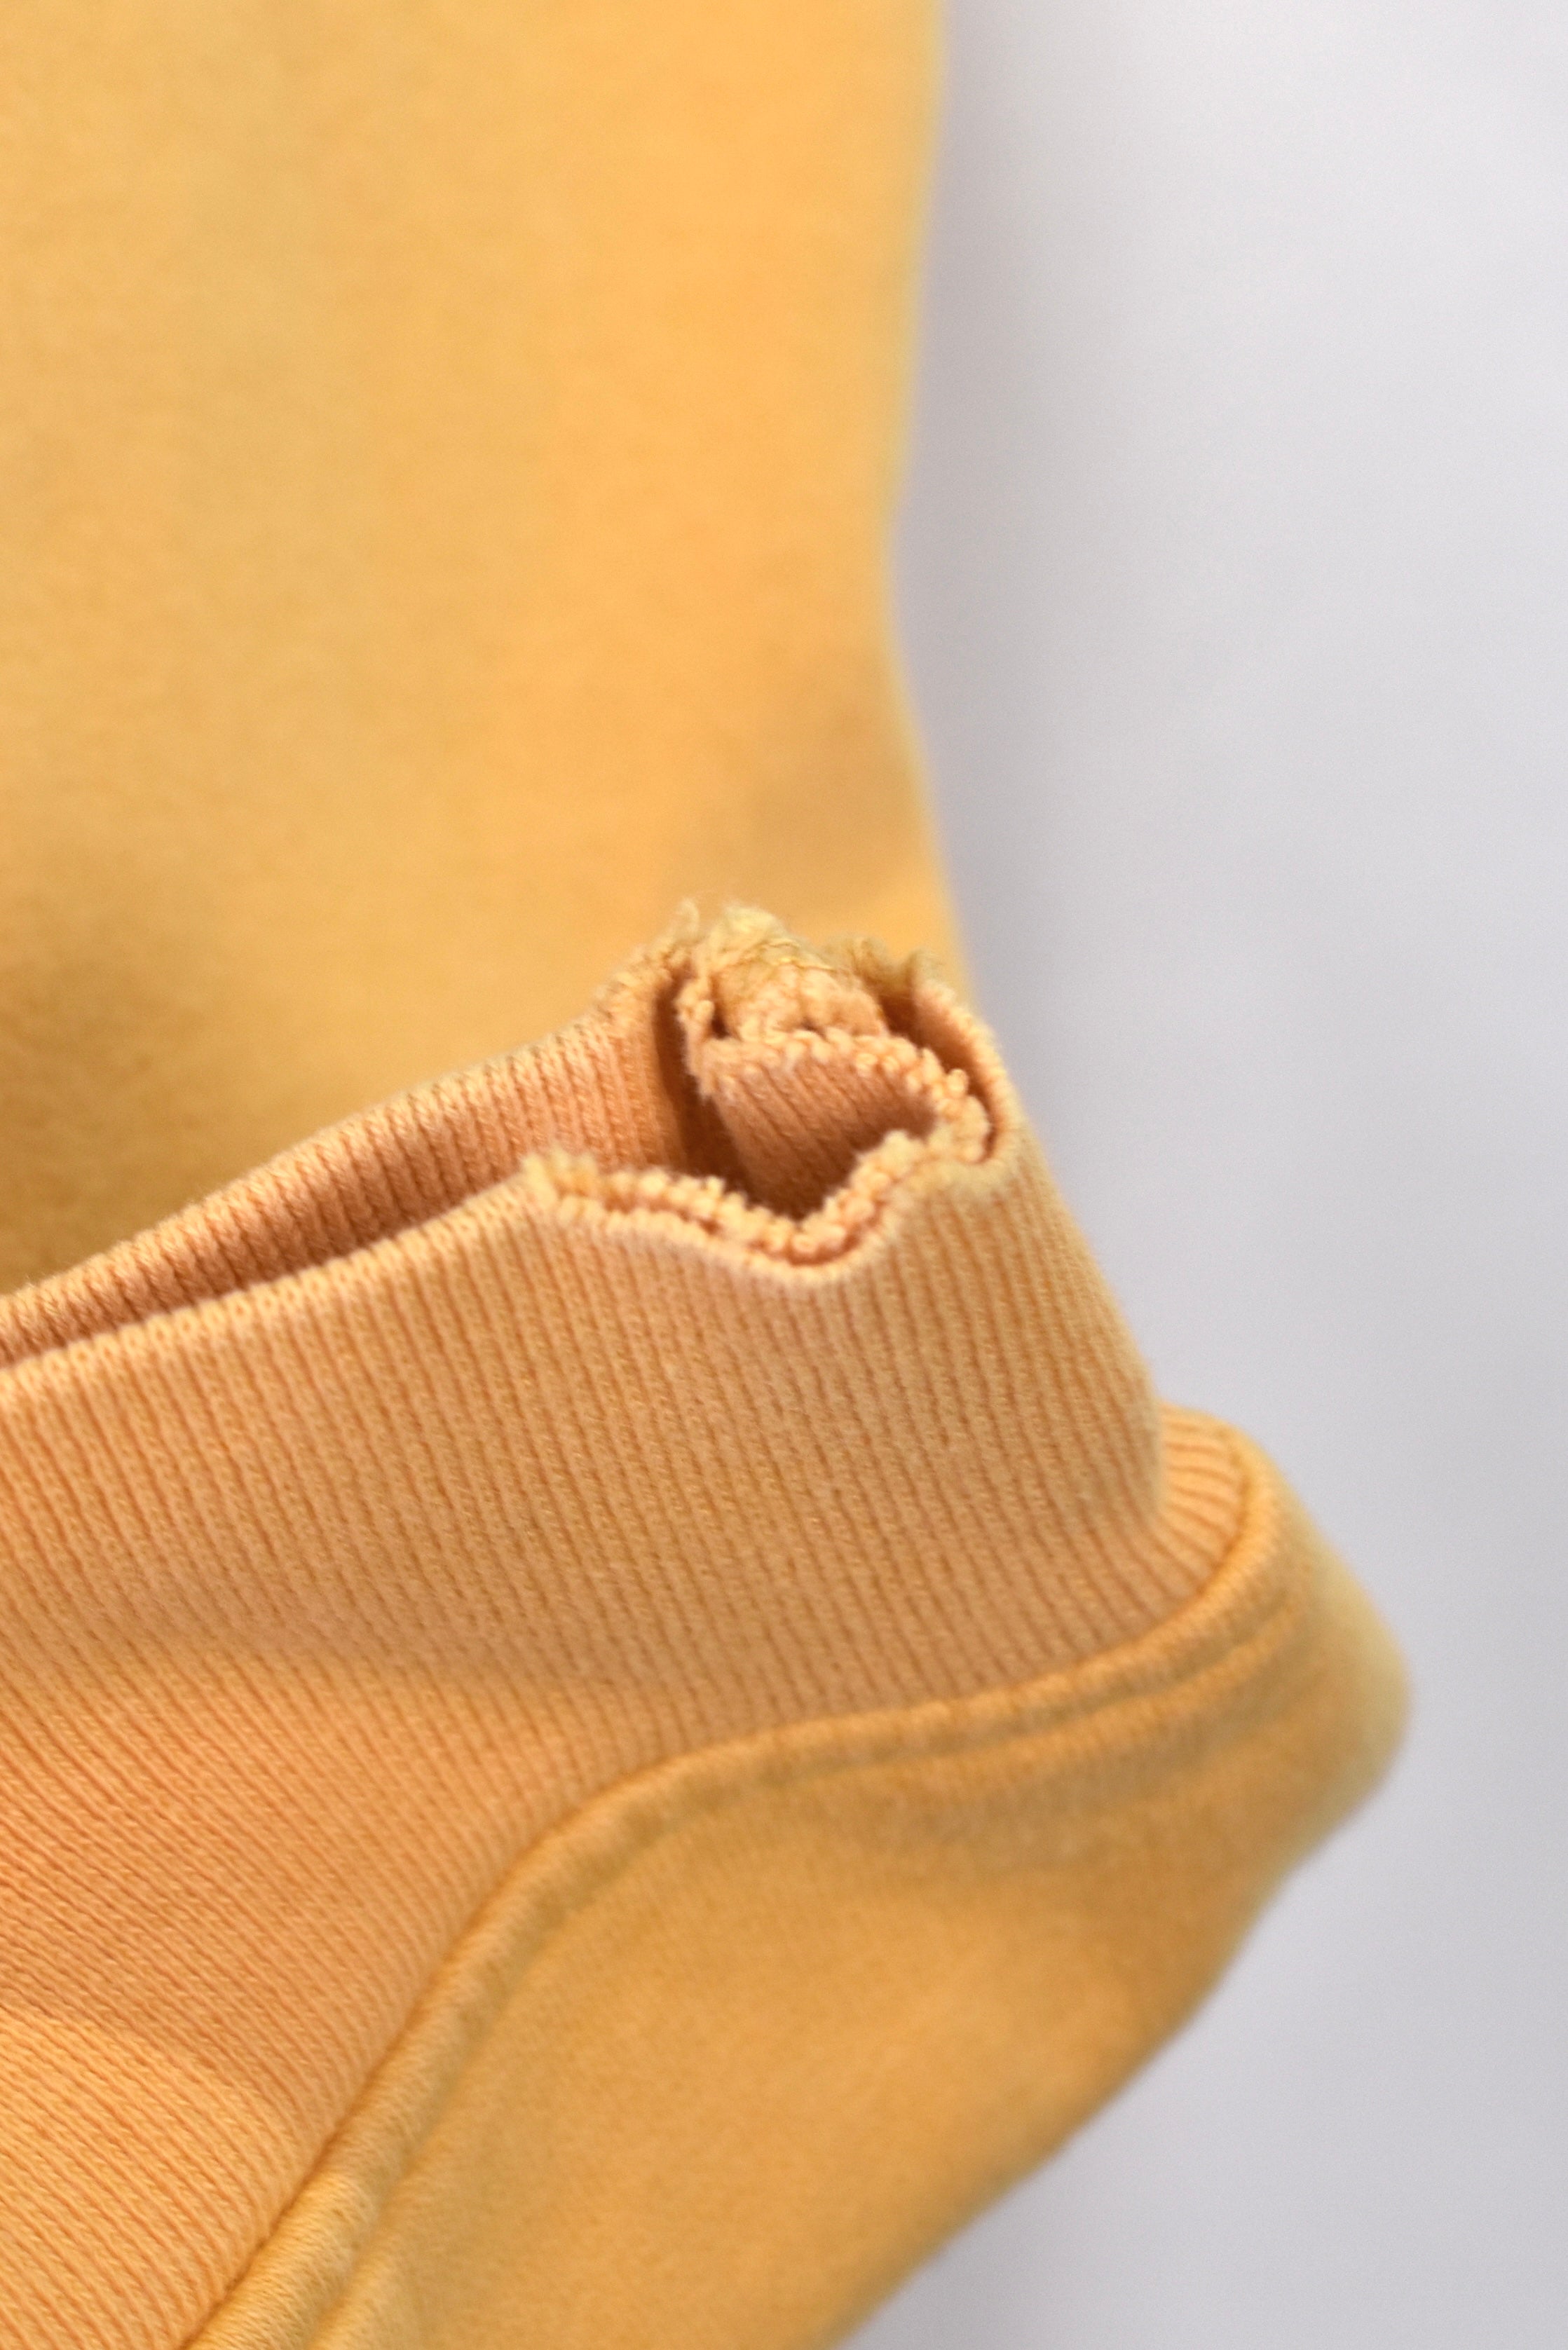 Vintage Nike hoodie (XL), yellow embroidered sweatshirt